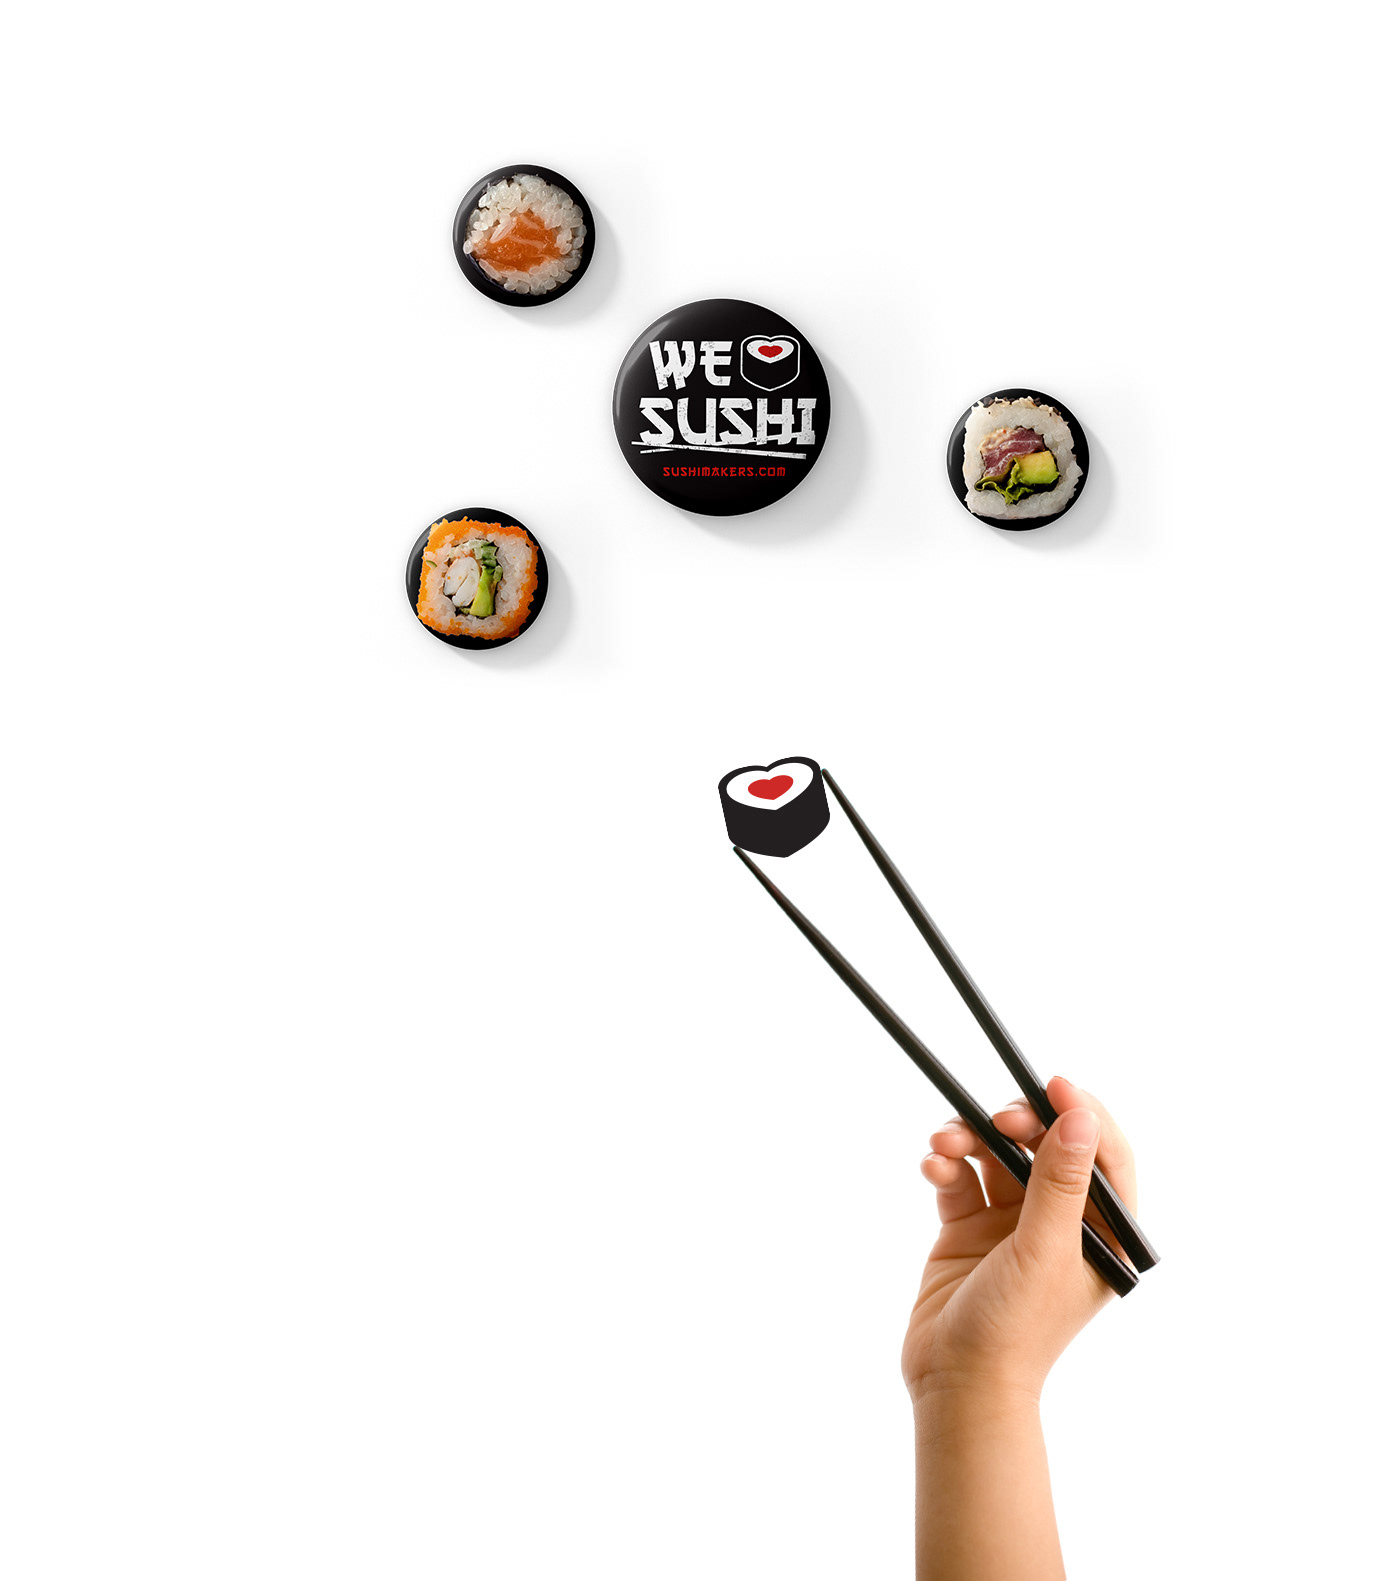 Sushi Food  restaurante makers sushimakers branding  logo design creative asian